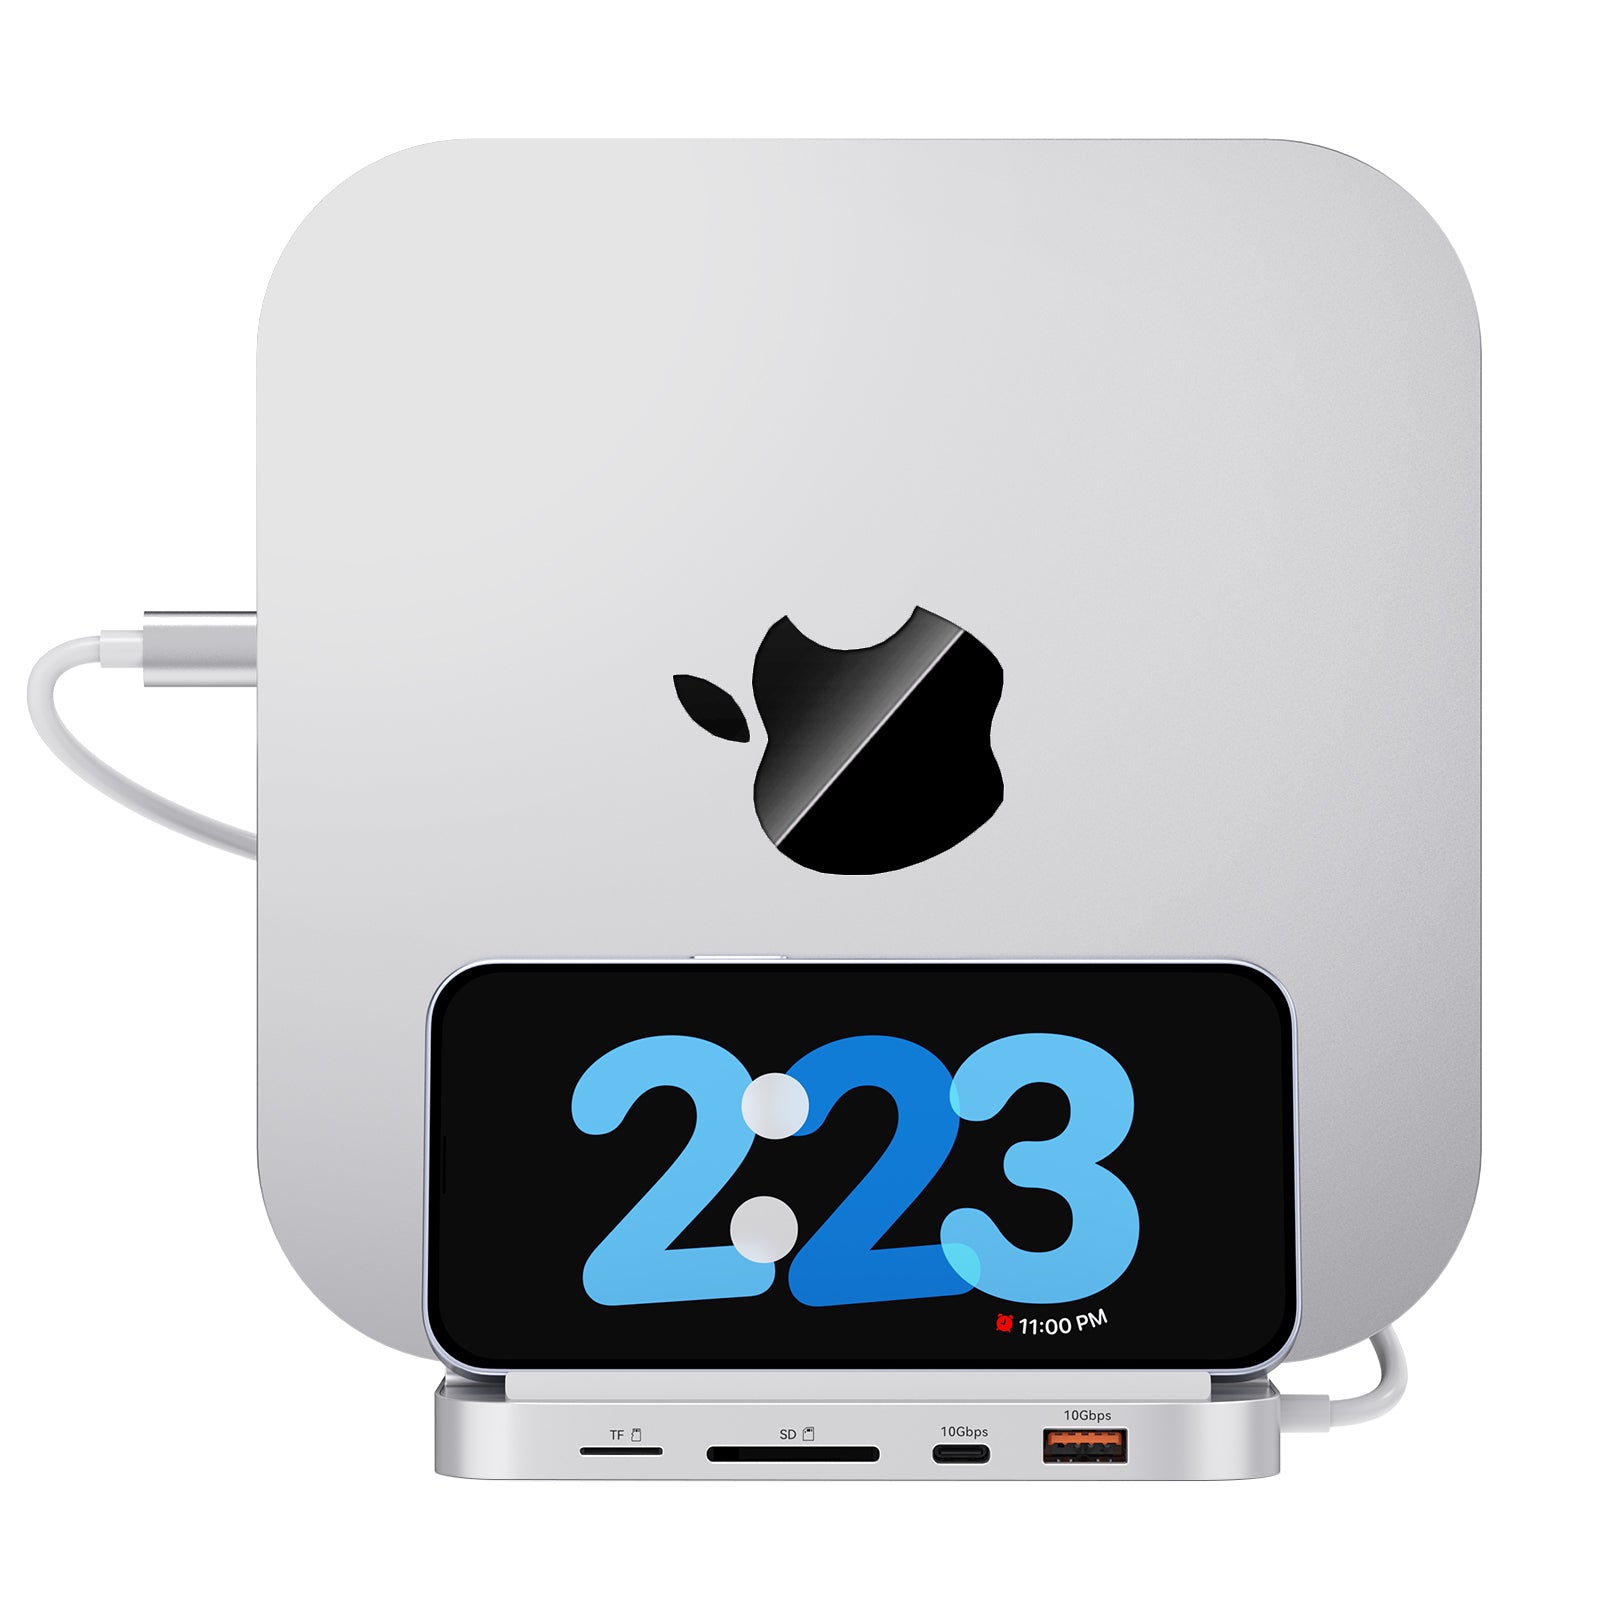 Minisopuru Upgrade Mac Mini Dock Support M.2 NVMe/SATA SSD, Mac Mini Hub|MH218A